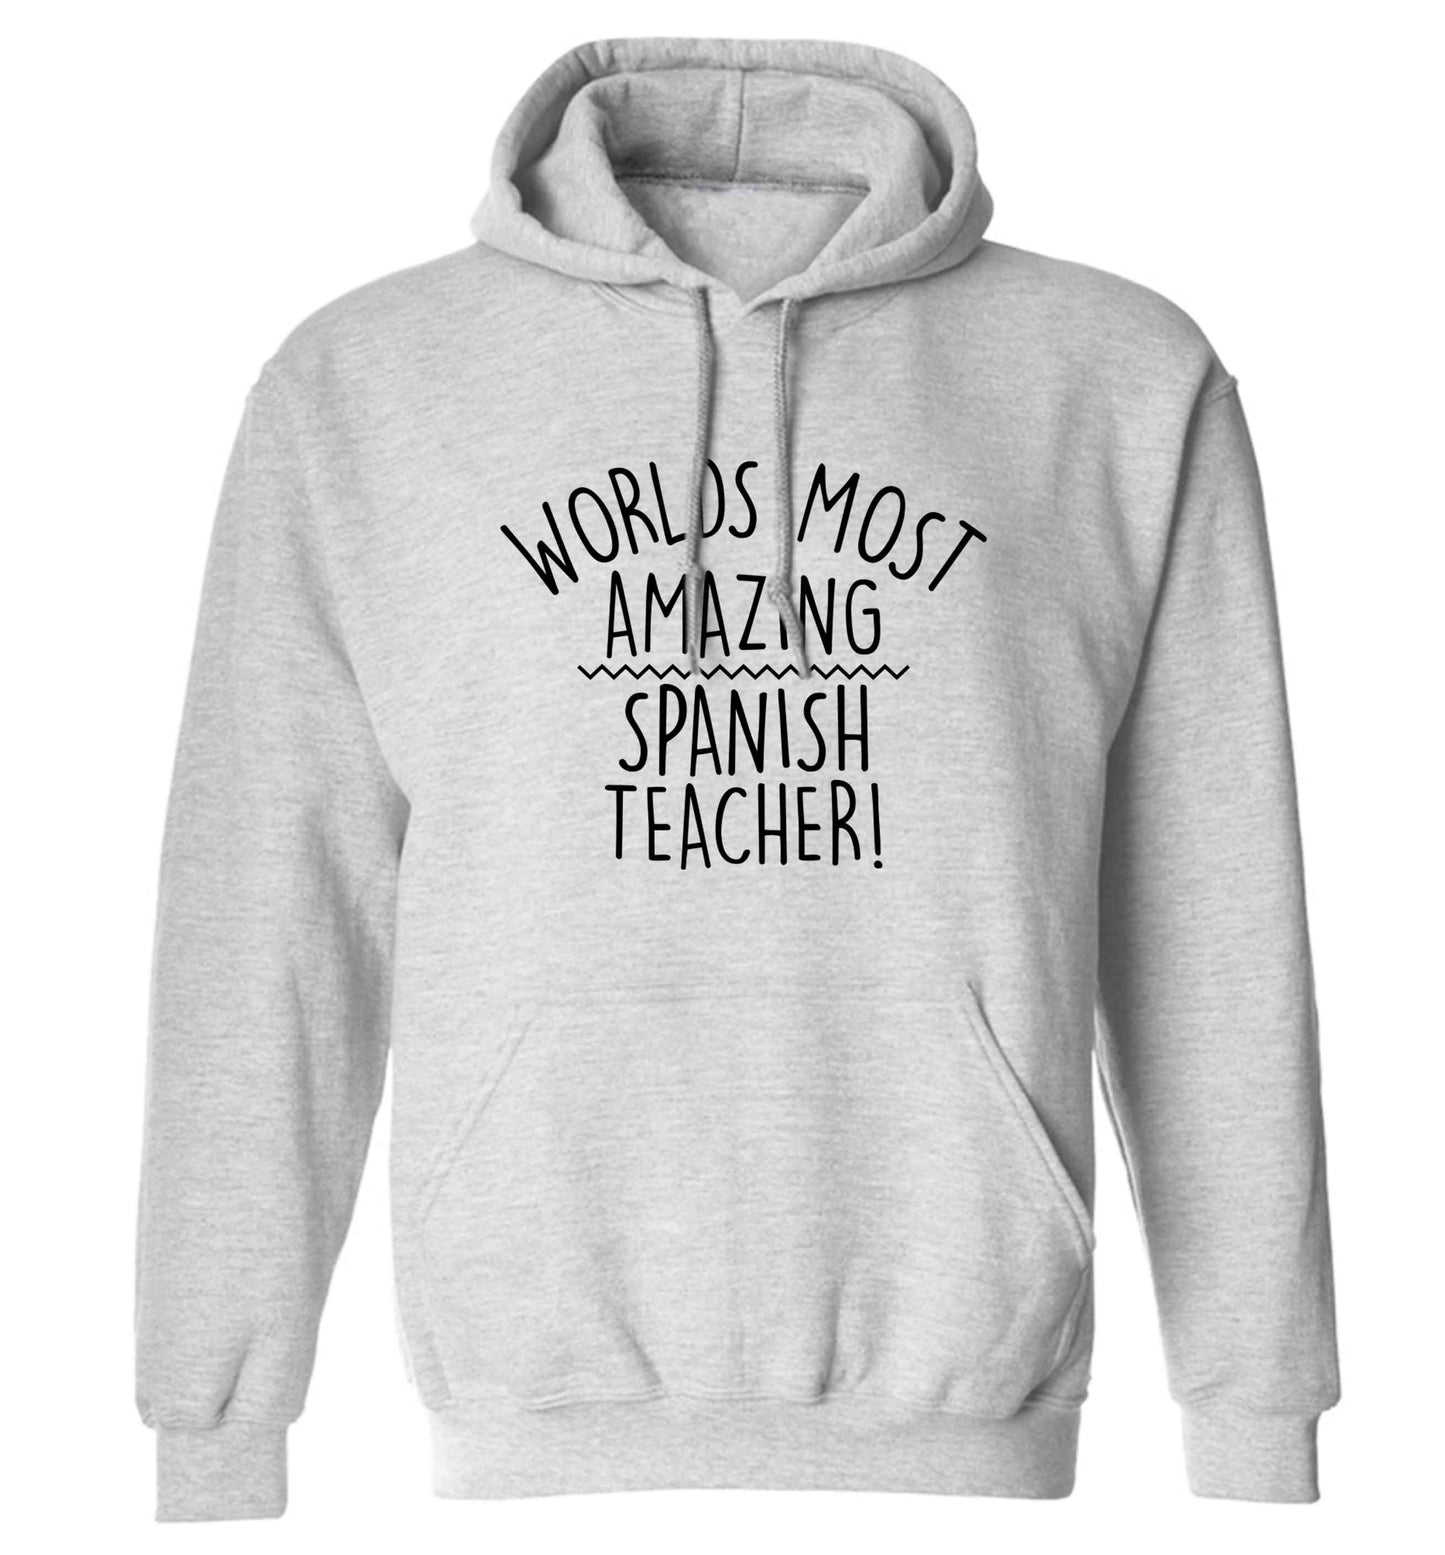 Worlds most amazing Spanish teacher adults unisex grey hoodie 2XL